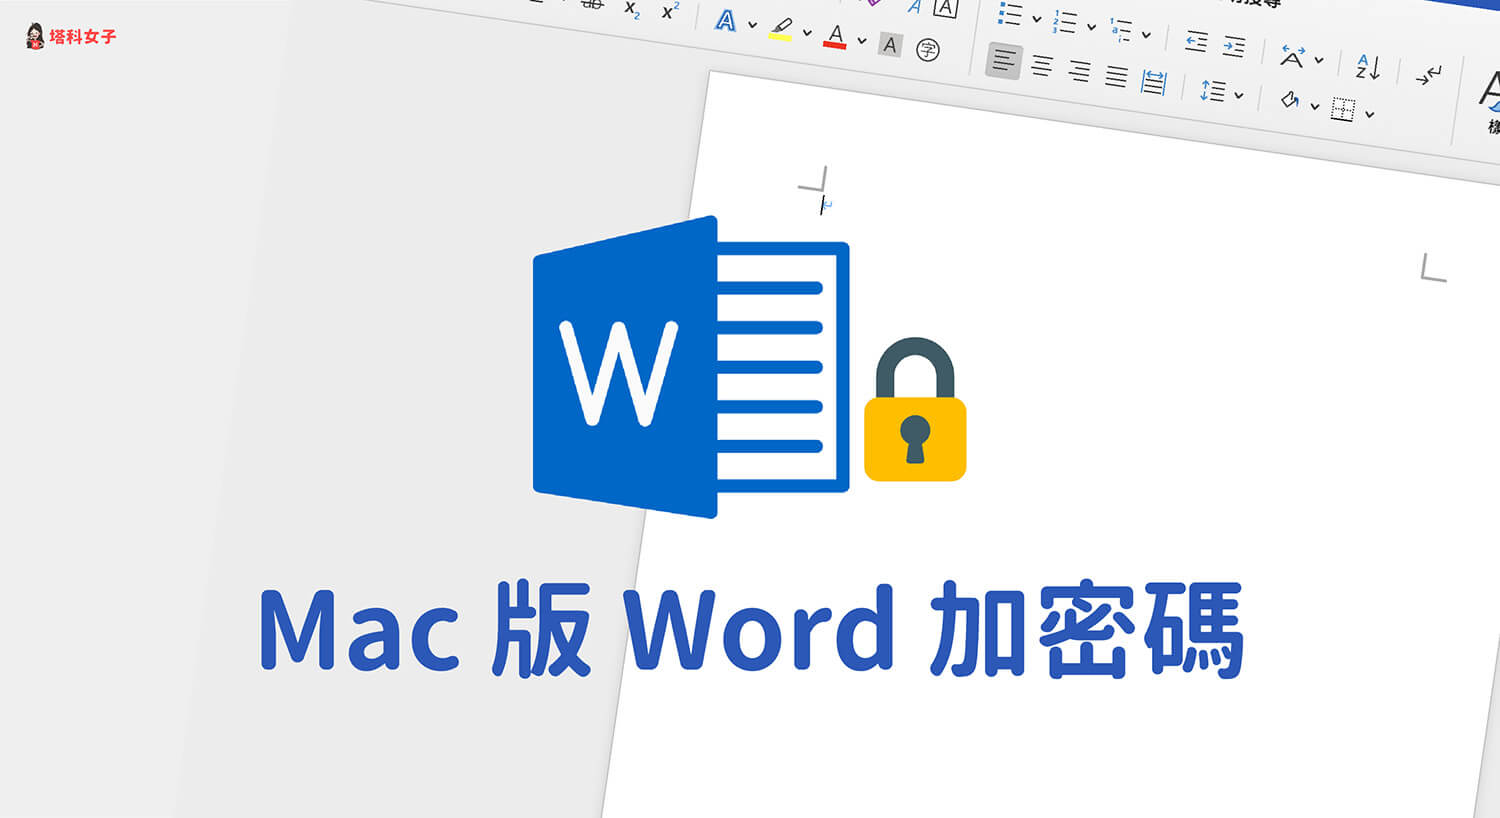 Mac Word加密碼教學，教你 2 招以密碼加密保護文件